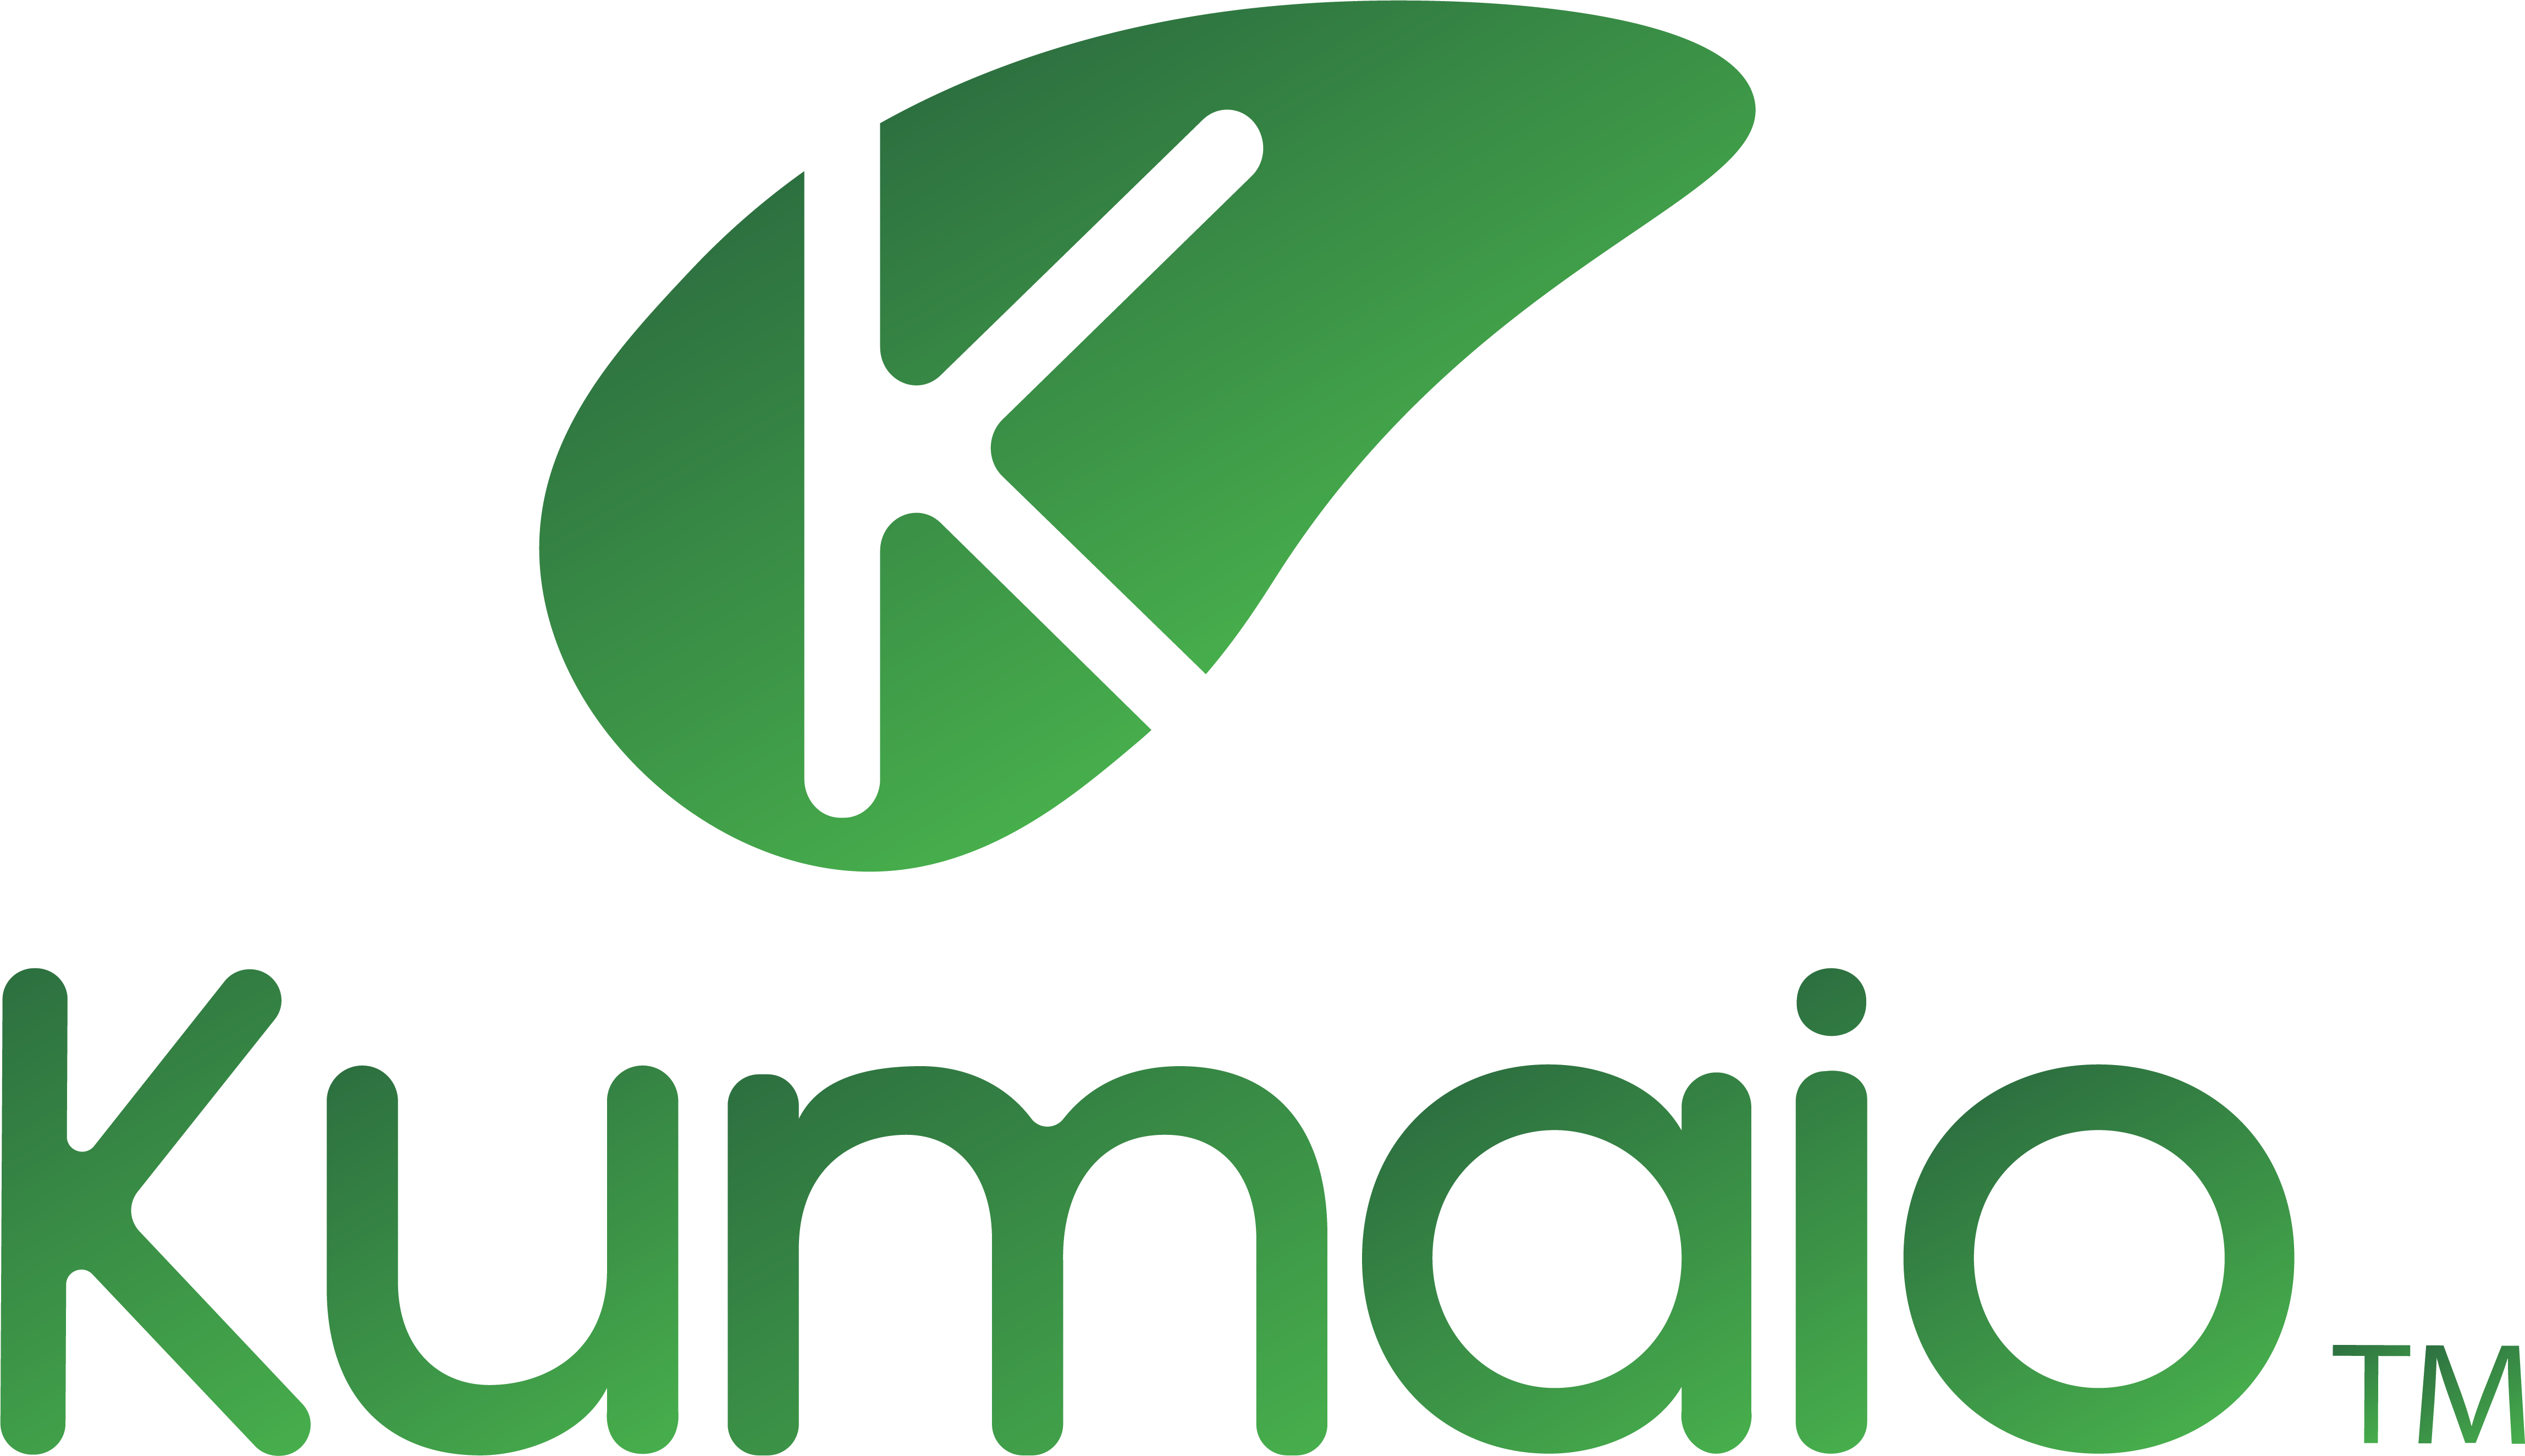 Kumaio™ Selecto